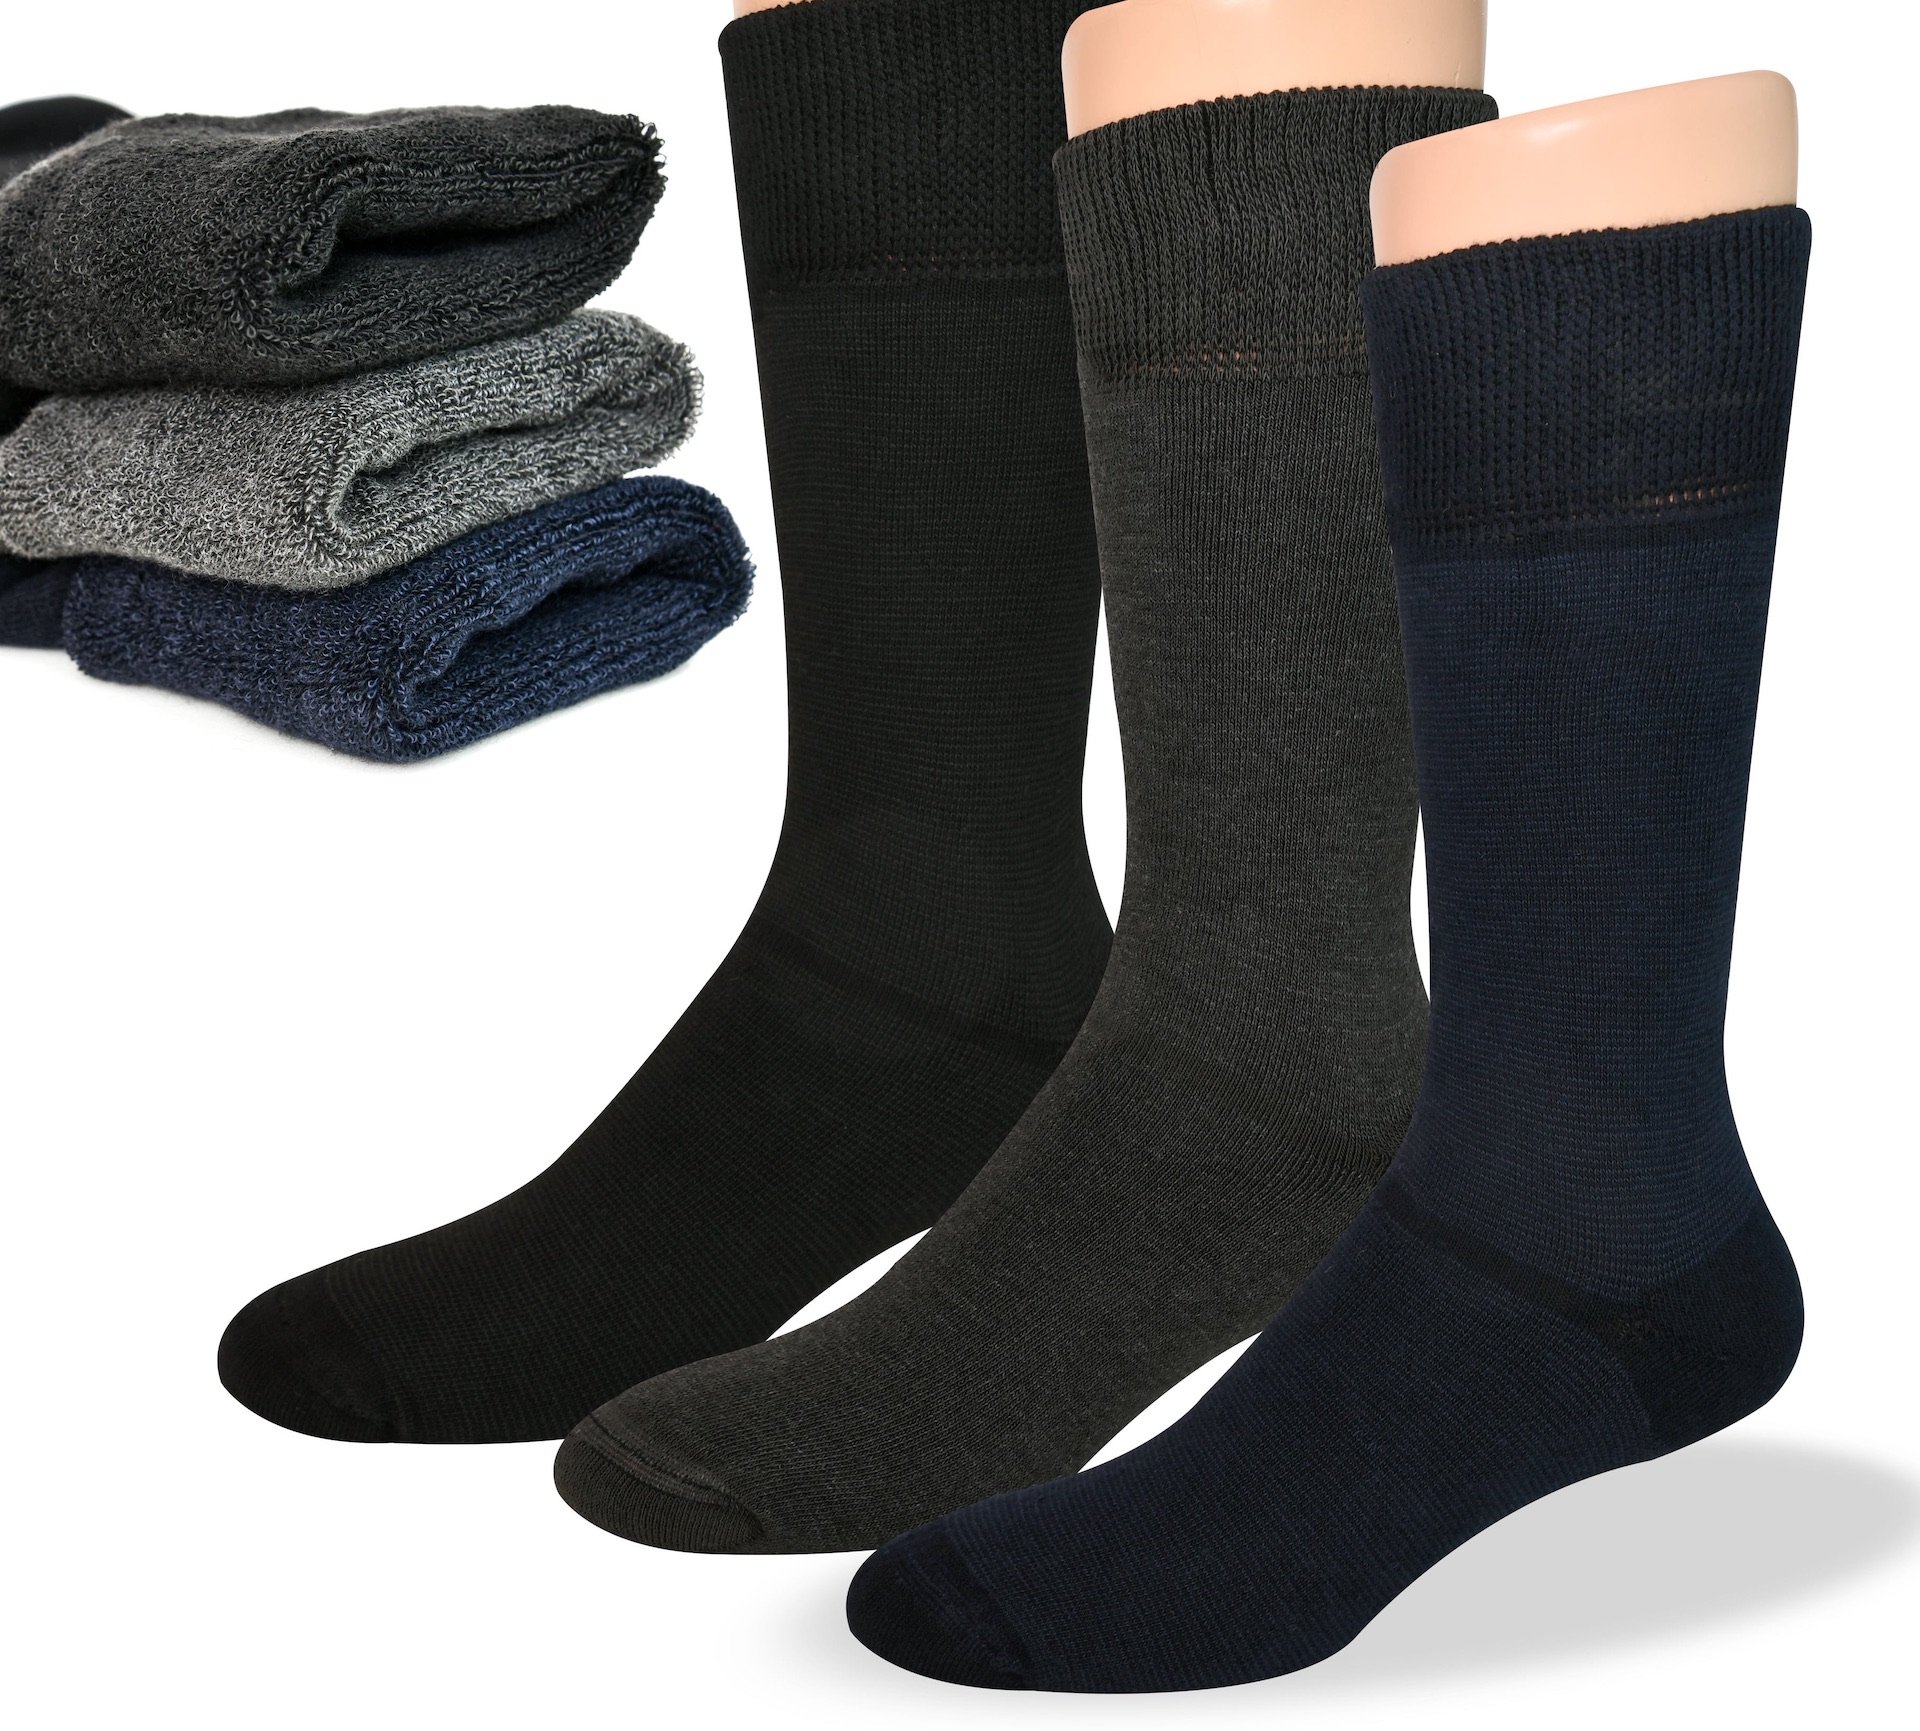 Calcetines deportivos impermeables para hombre, calcetín térmico